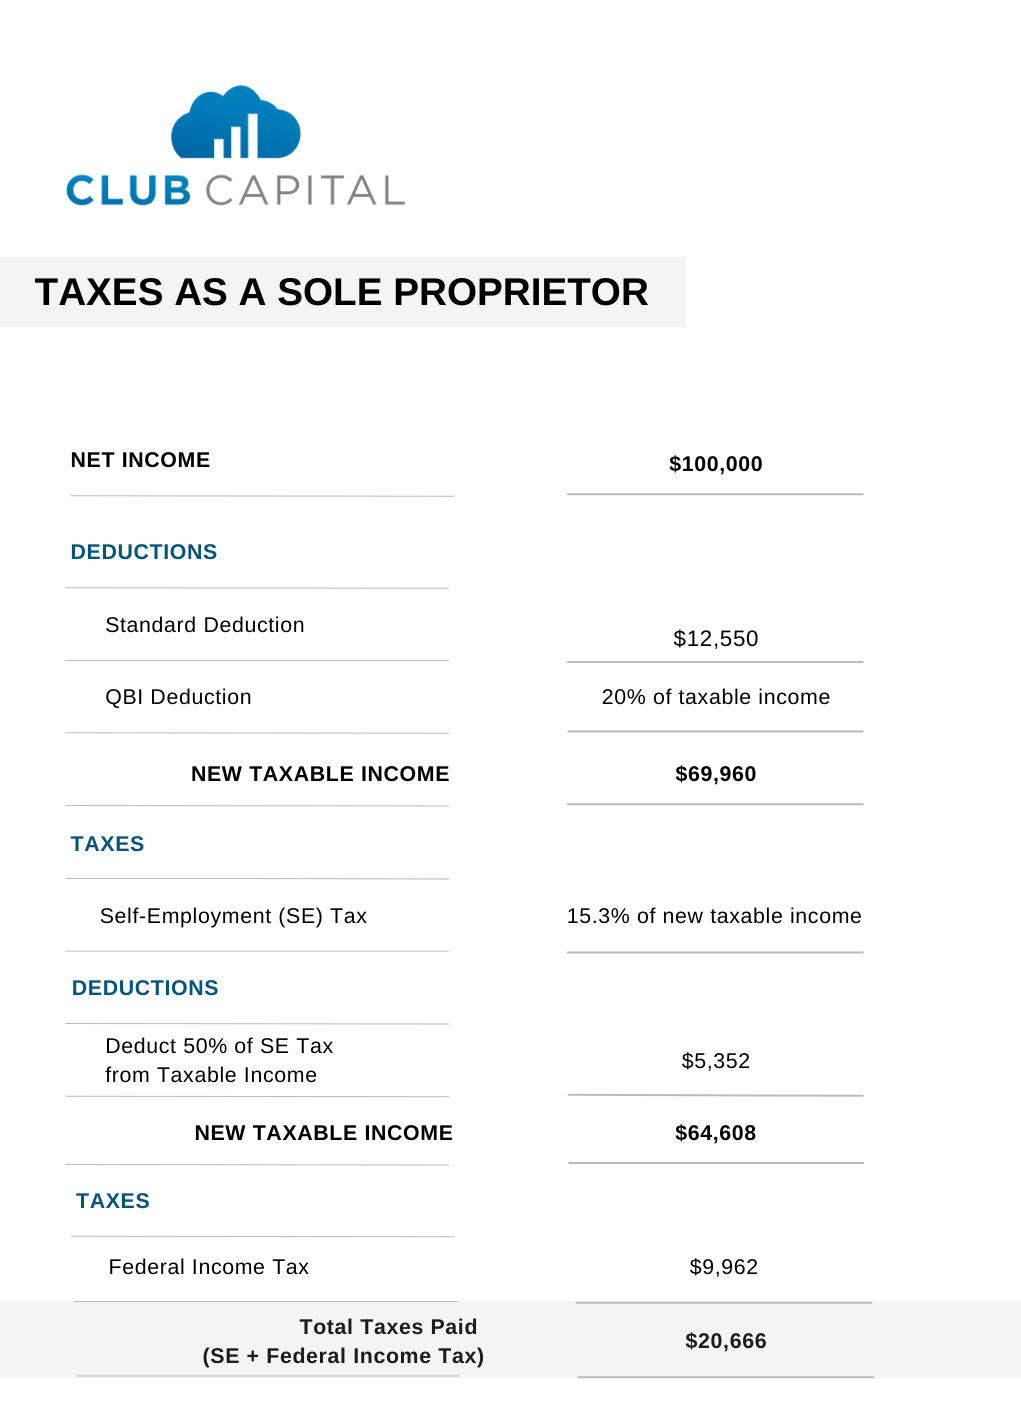 Club Capital Taxes as a Sole Proprietor (2)